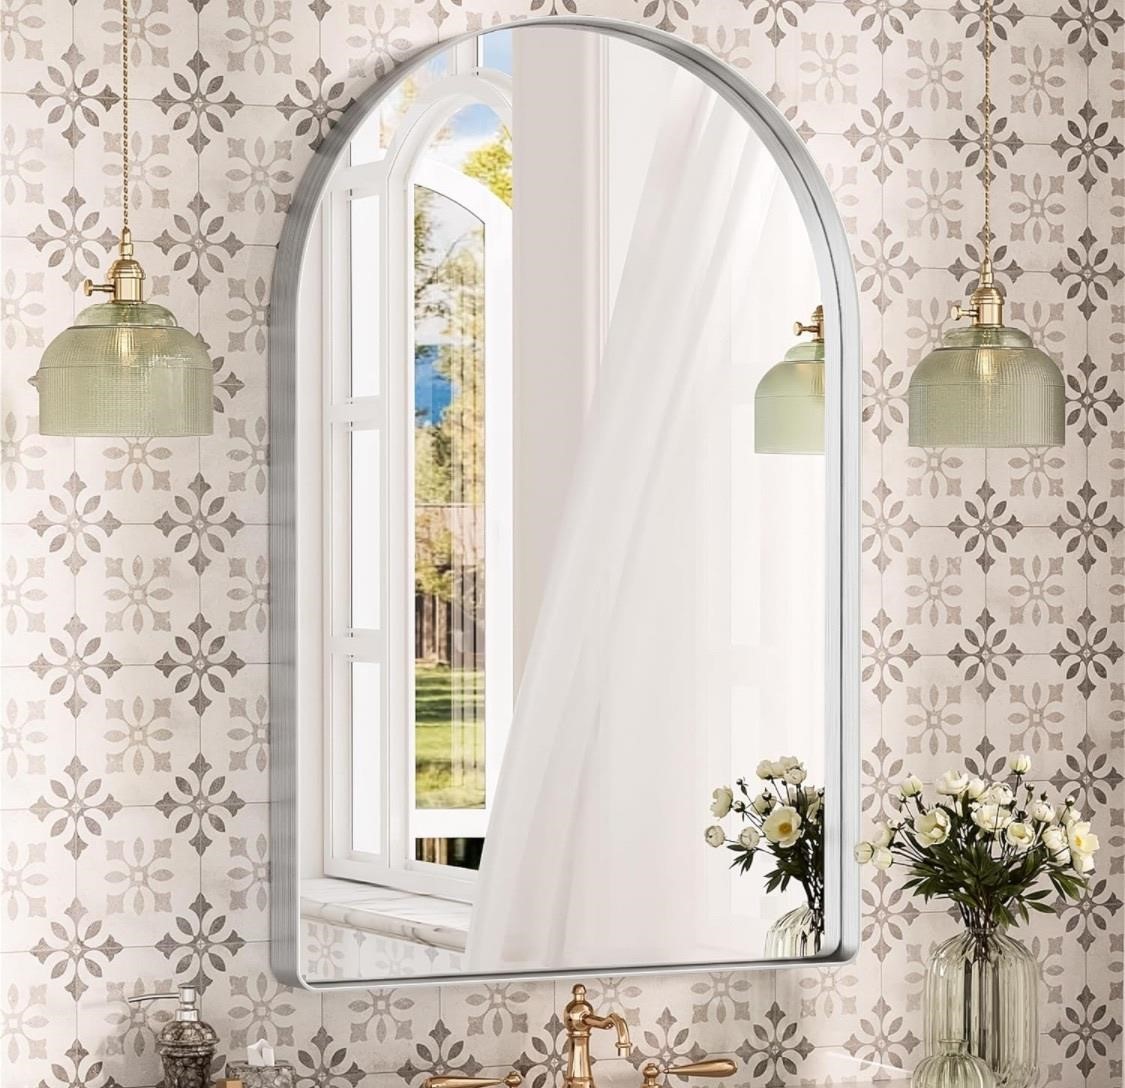 $80 Suidia Bathroom Mirror, 22×30 Inch Wall Mirror